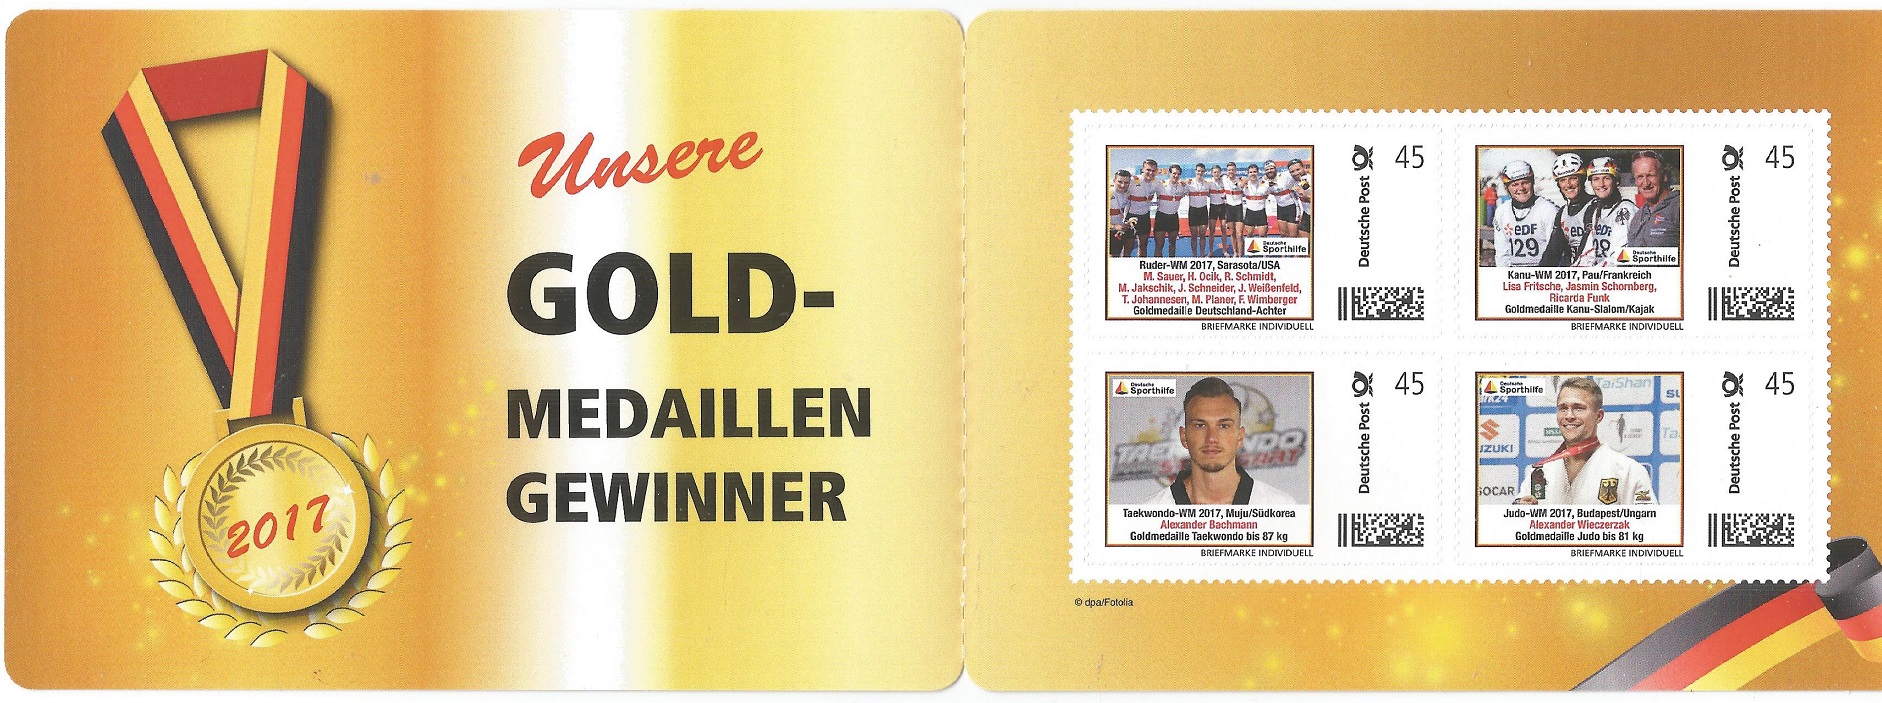 Stamp GER 2018 Deutsche Sporthilfe booklet with German M8 crew gold medal winner at WRC Sarasota USA 2017